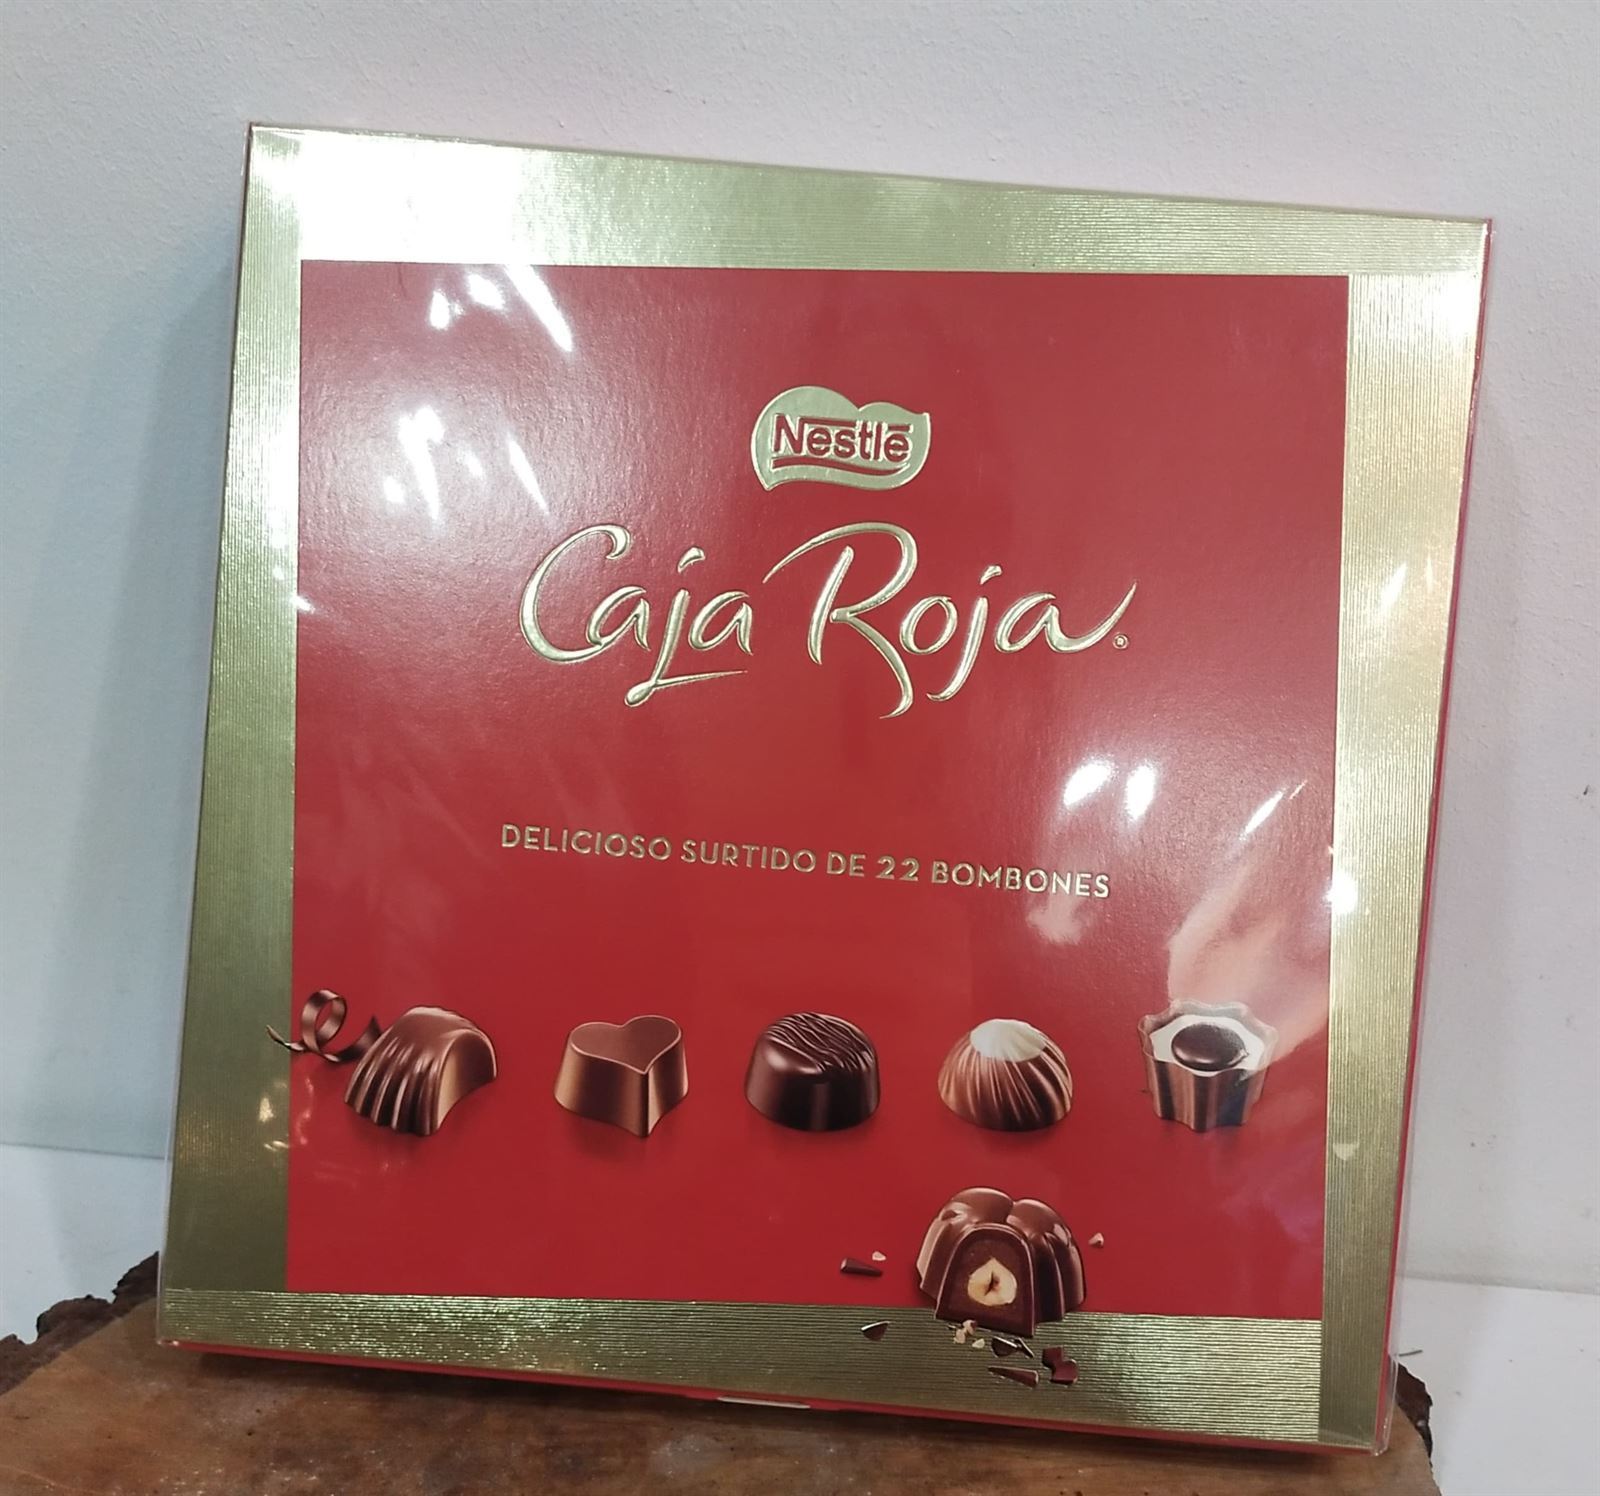 Bombones de La Caja Roja (Nestlé) - Imagen 1